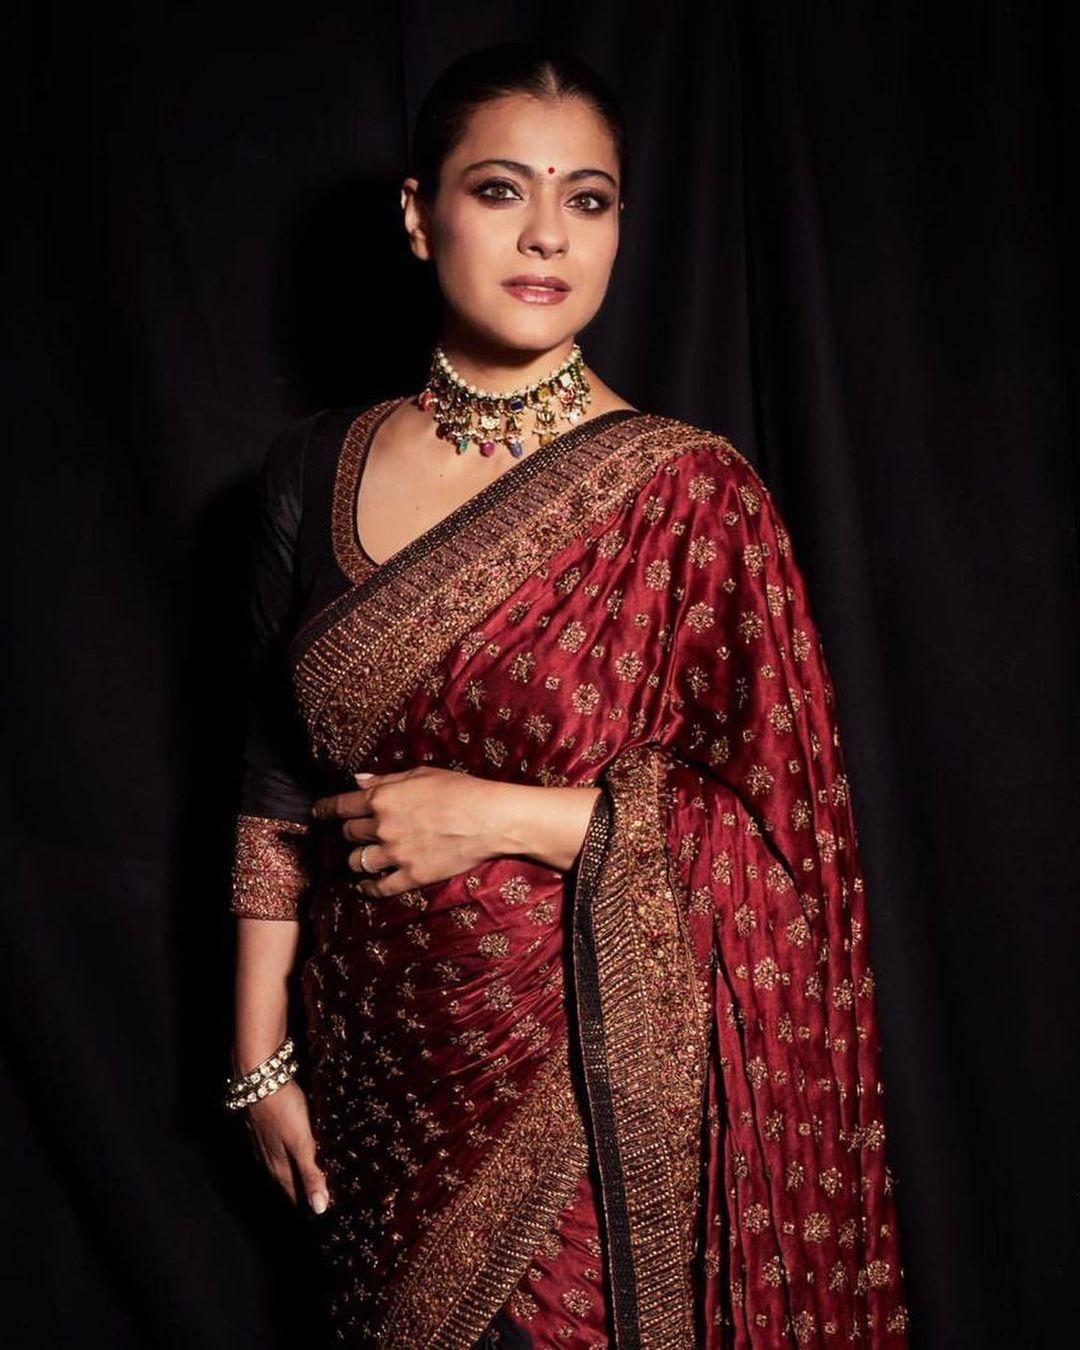 She wore a stunning maroon and grey saree designed by Ritu Kumar